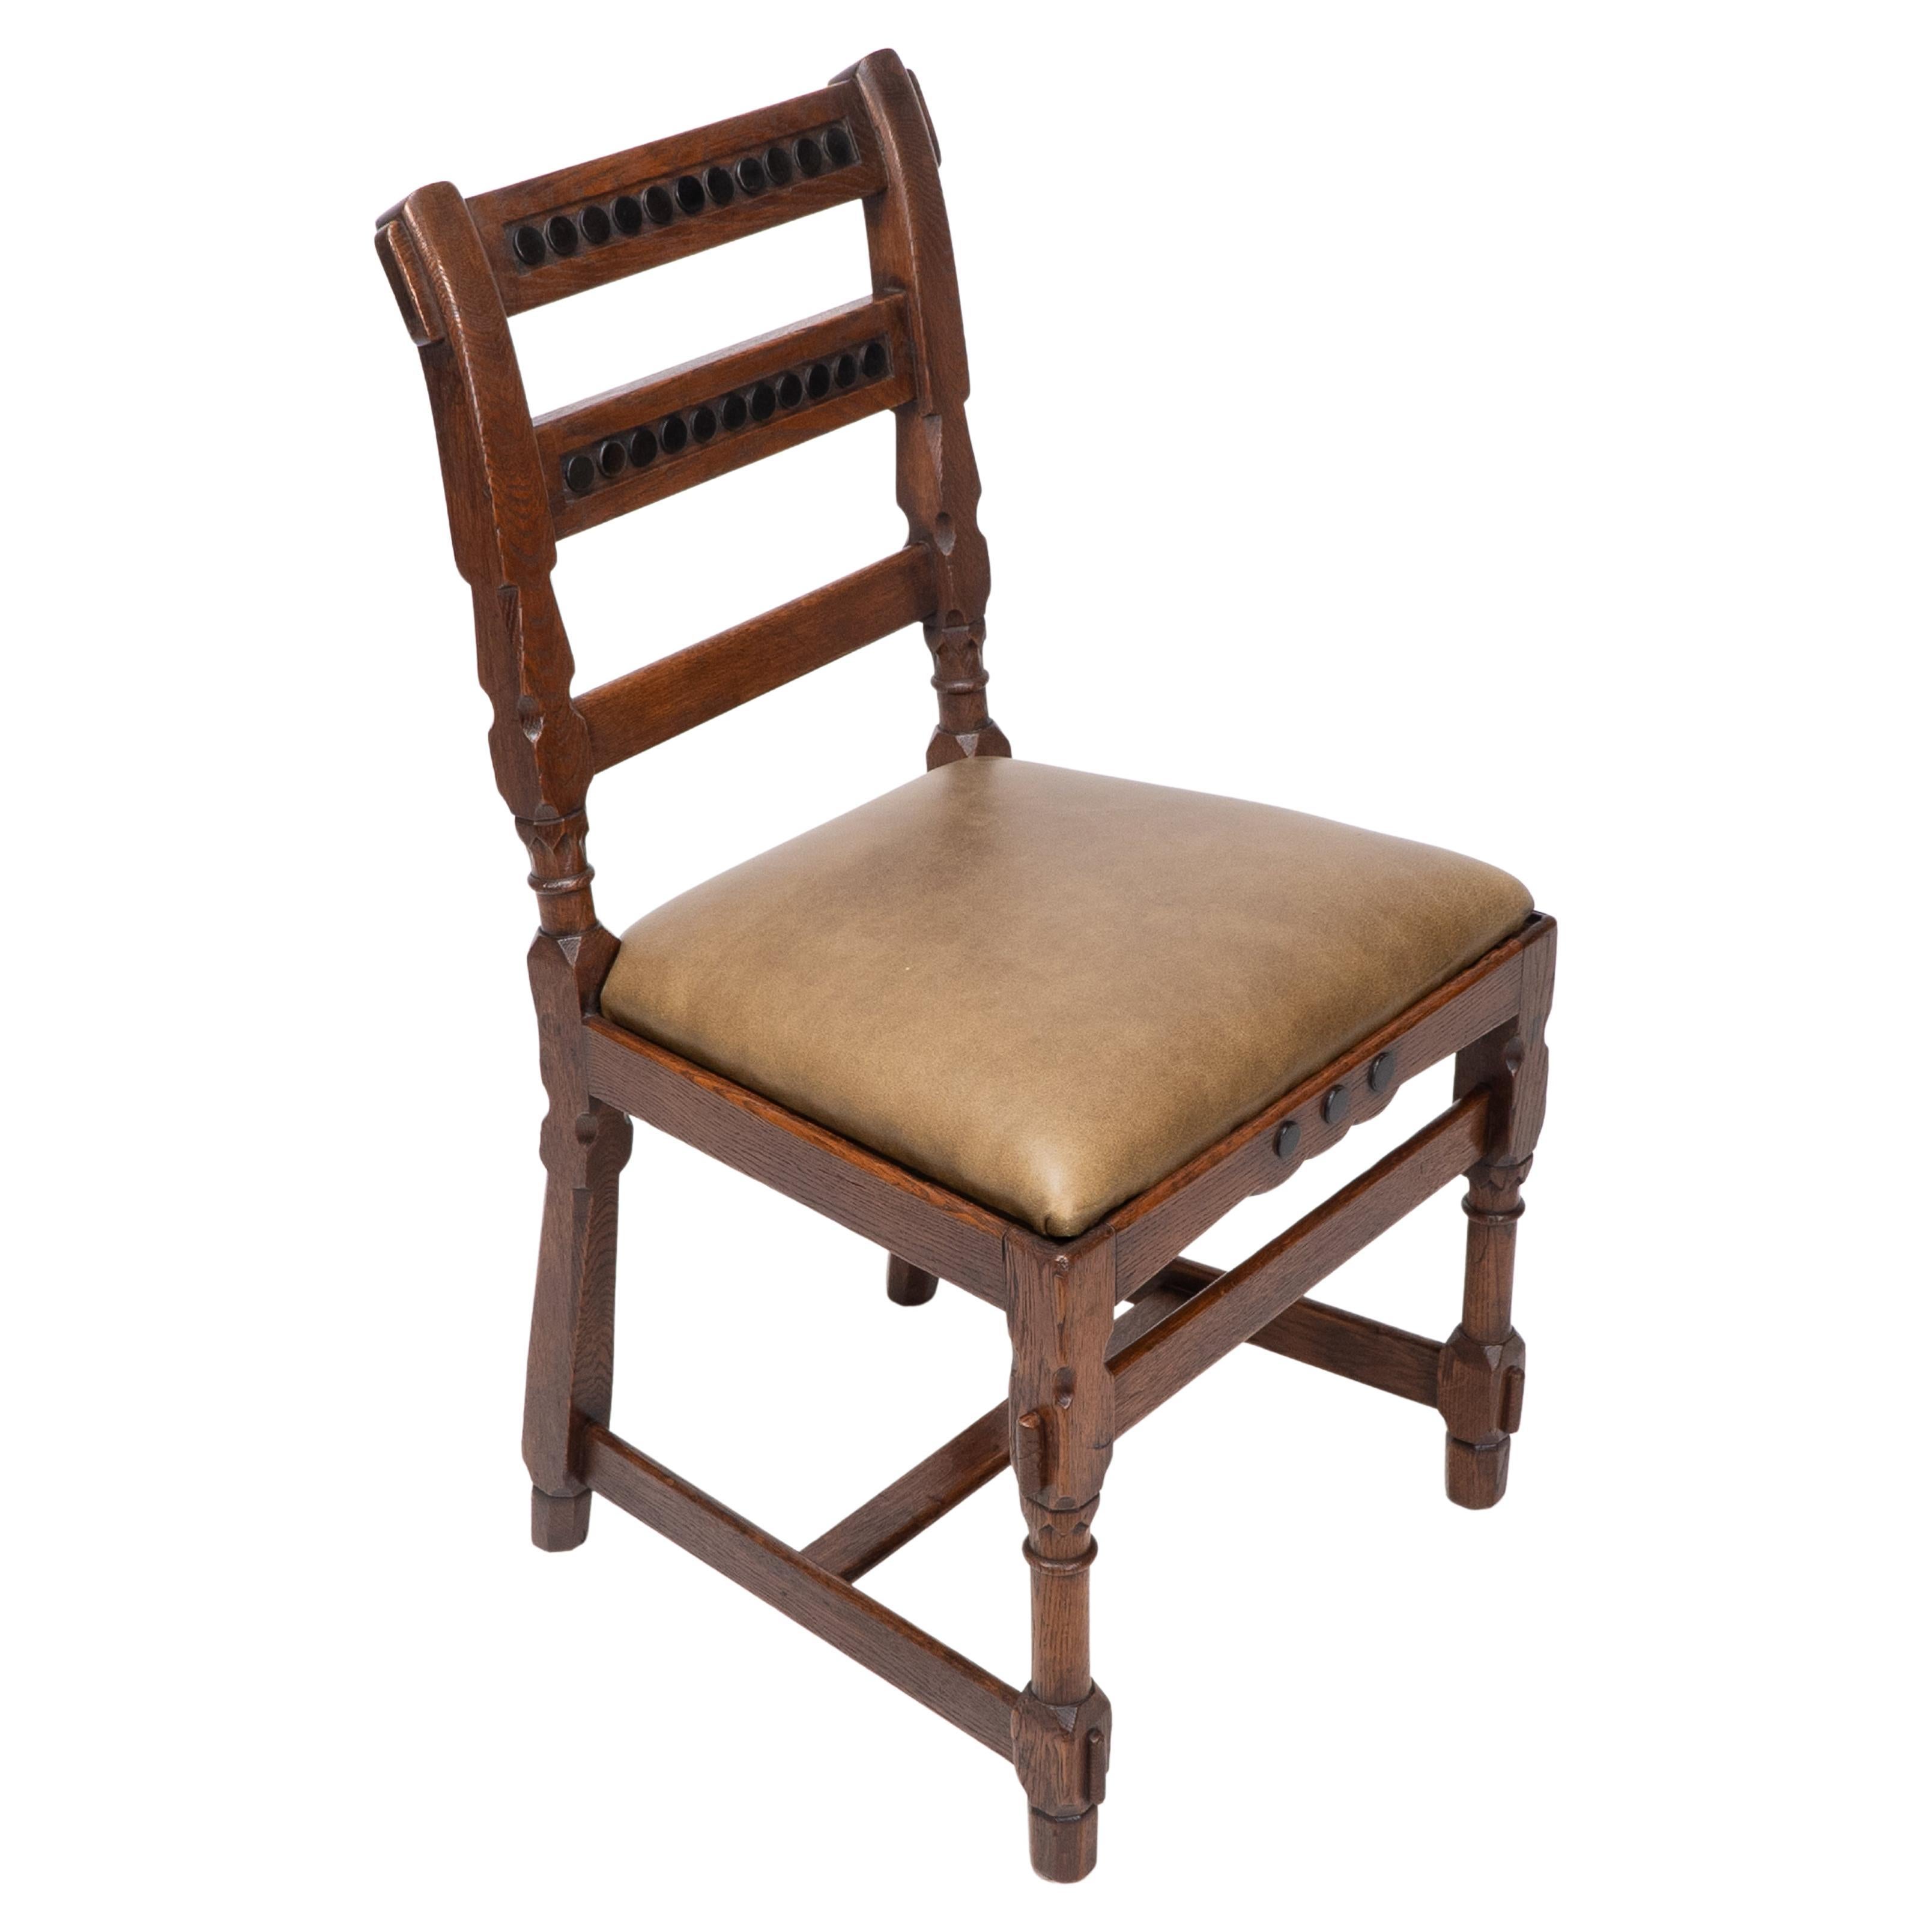 J P Seddon attri. An Aesthetic Movement oak side chair with ebonized circles For Sale